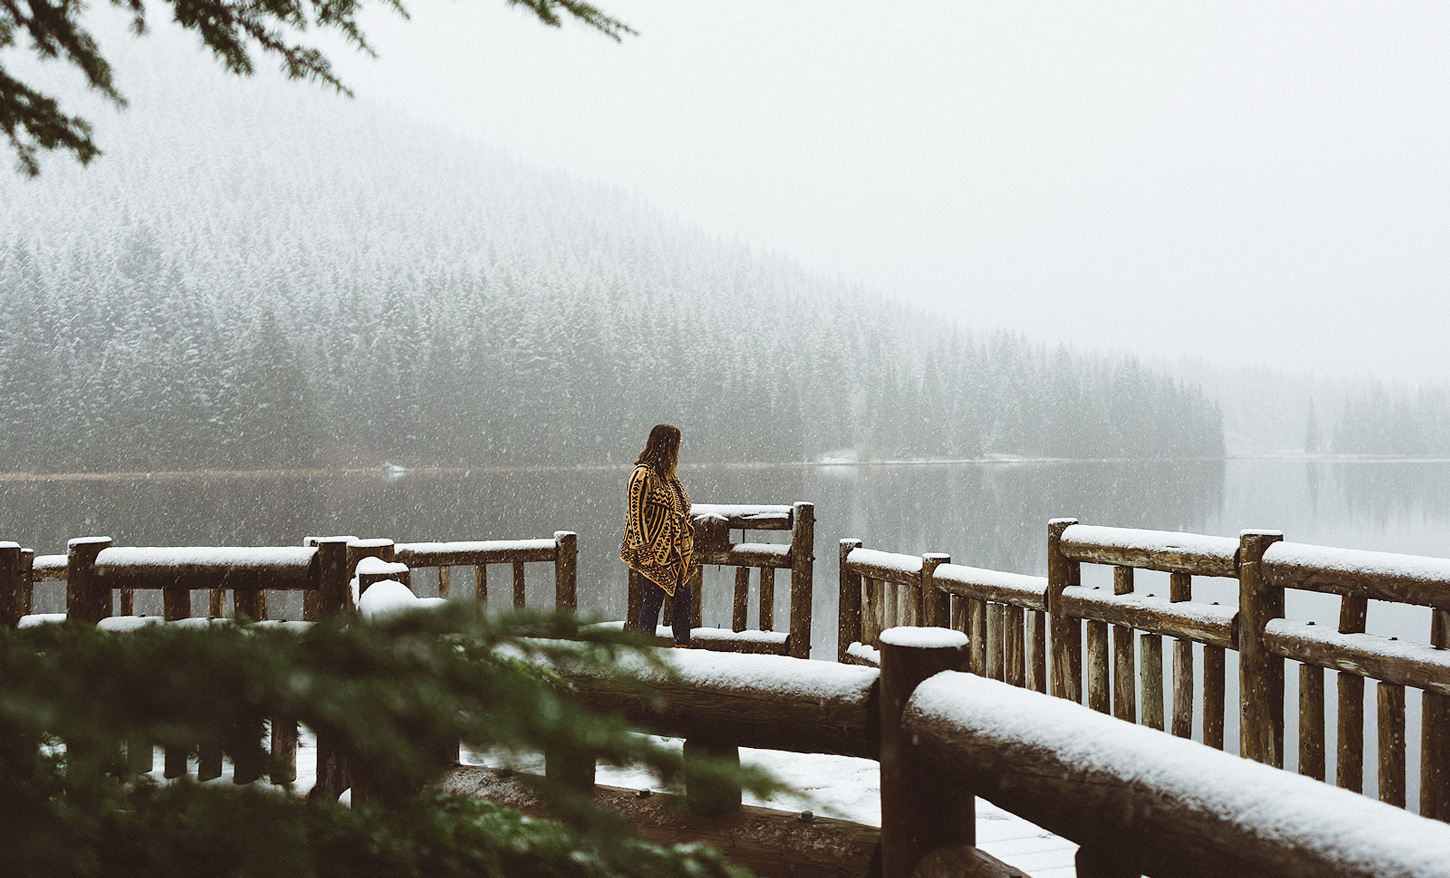 A woman in a snowy wooden platform